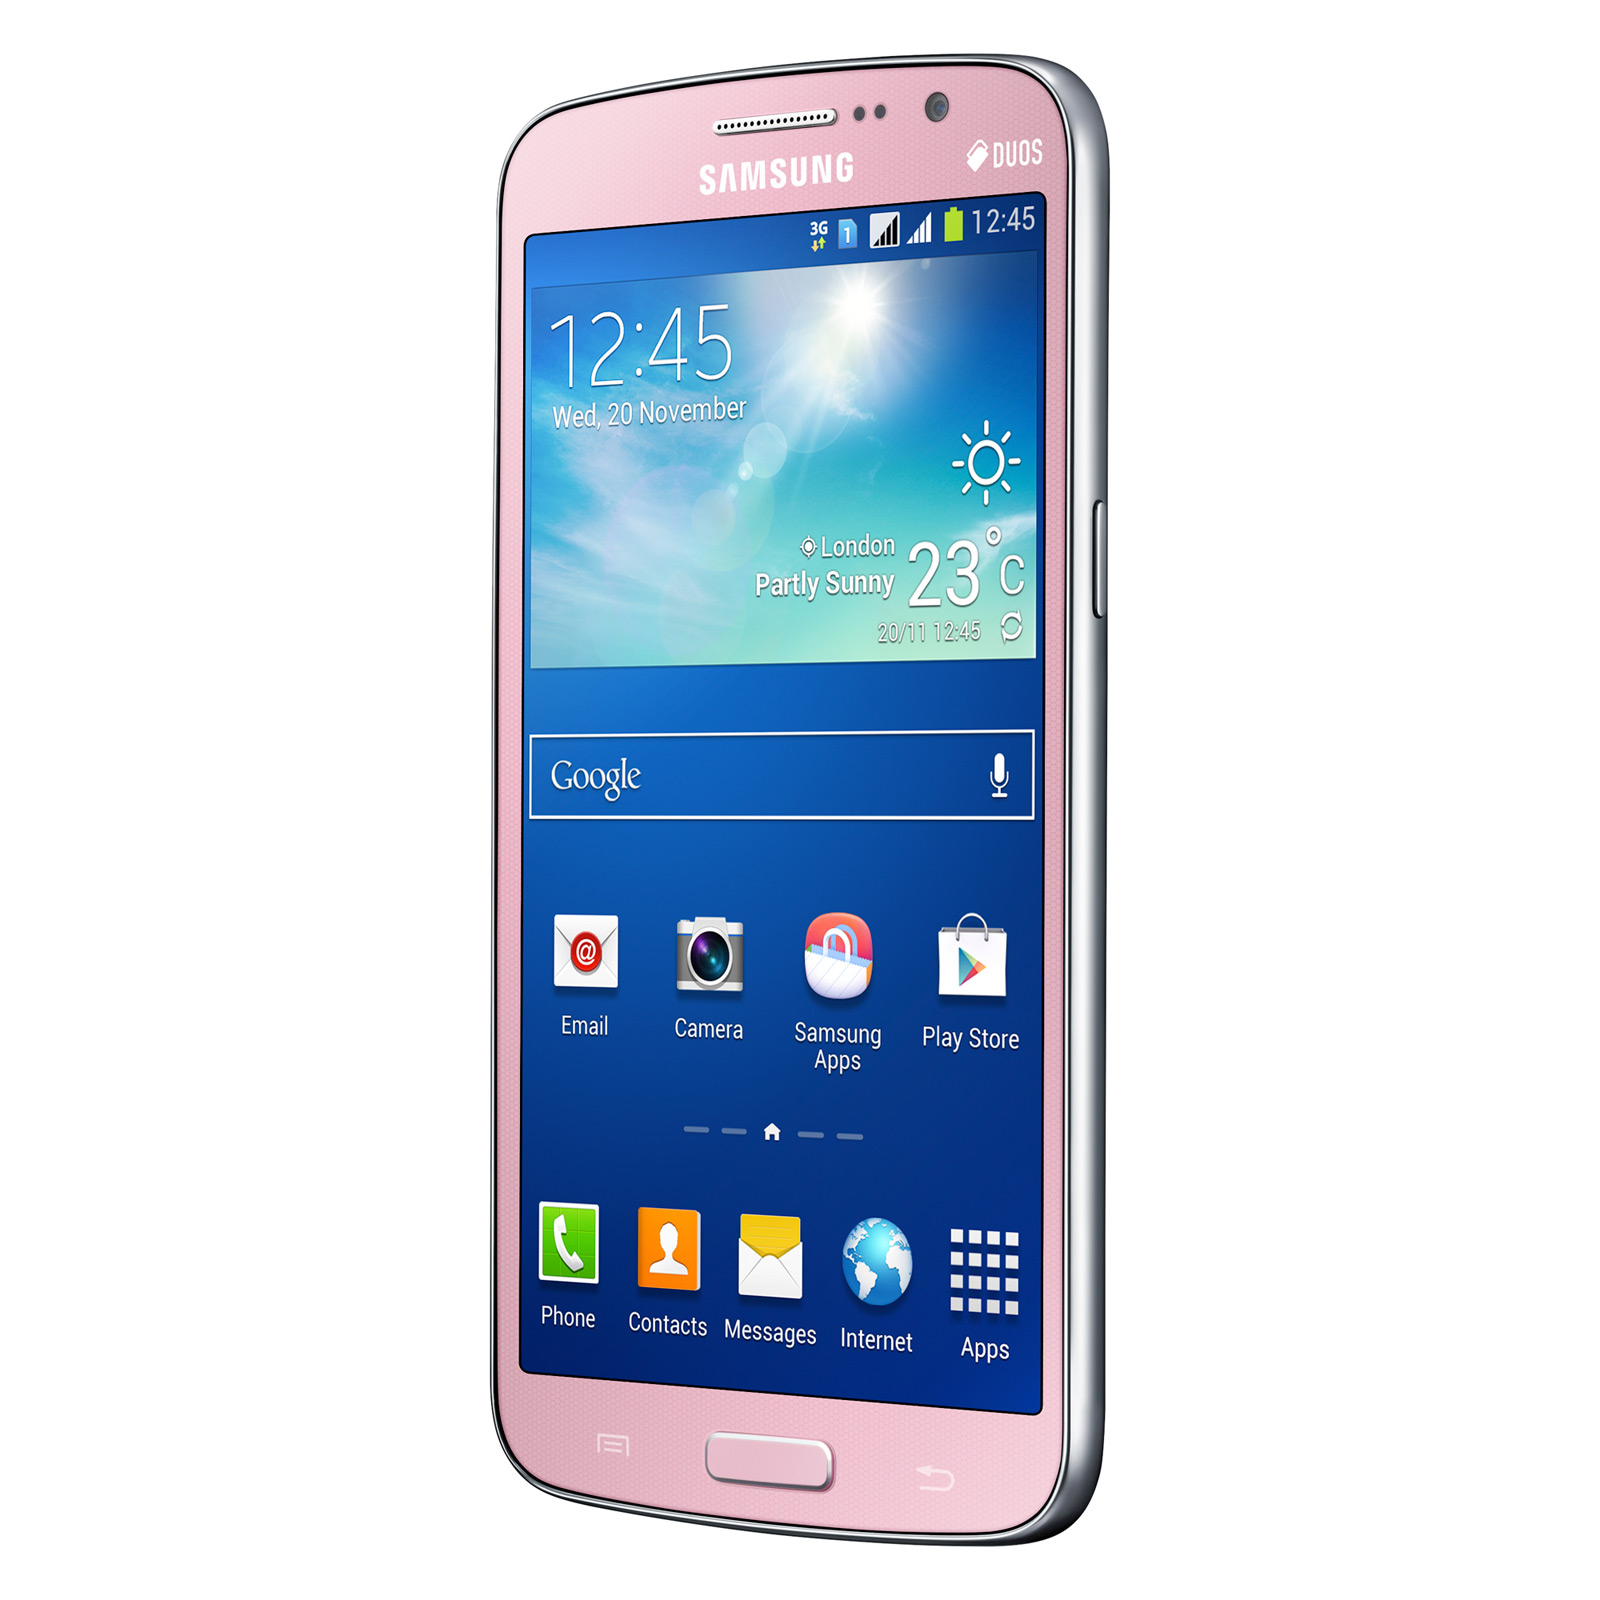 Samsung g7102 Galaxy Grand 2